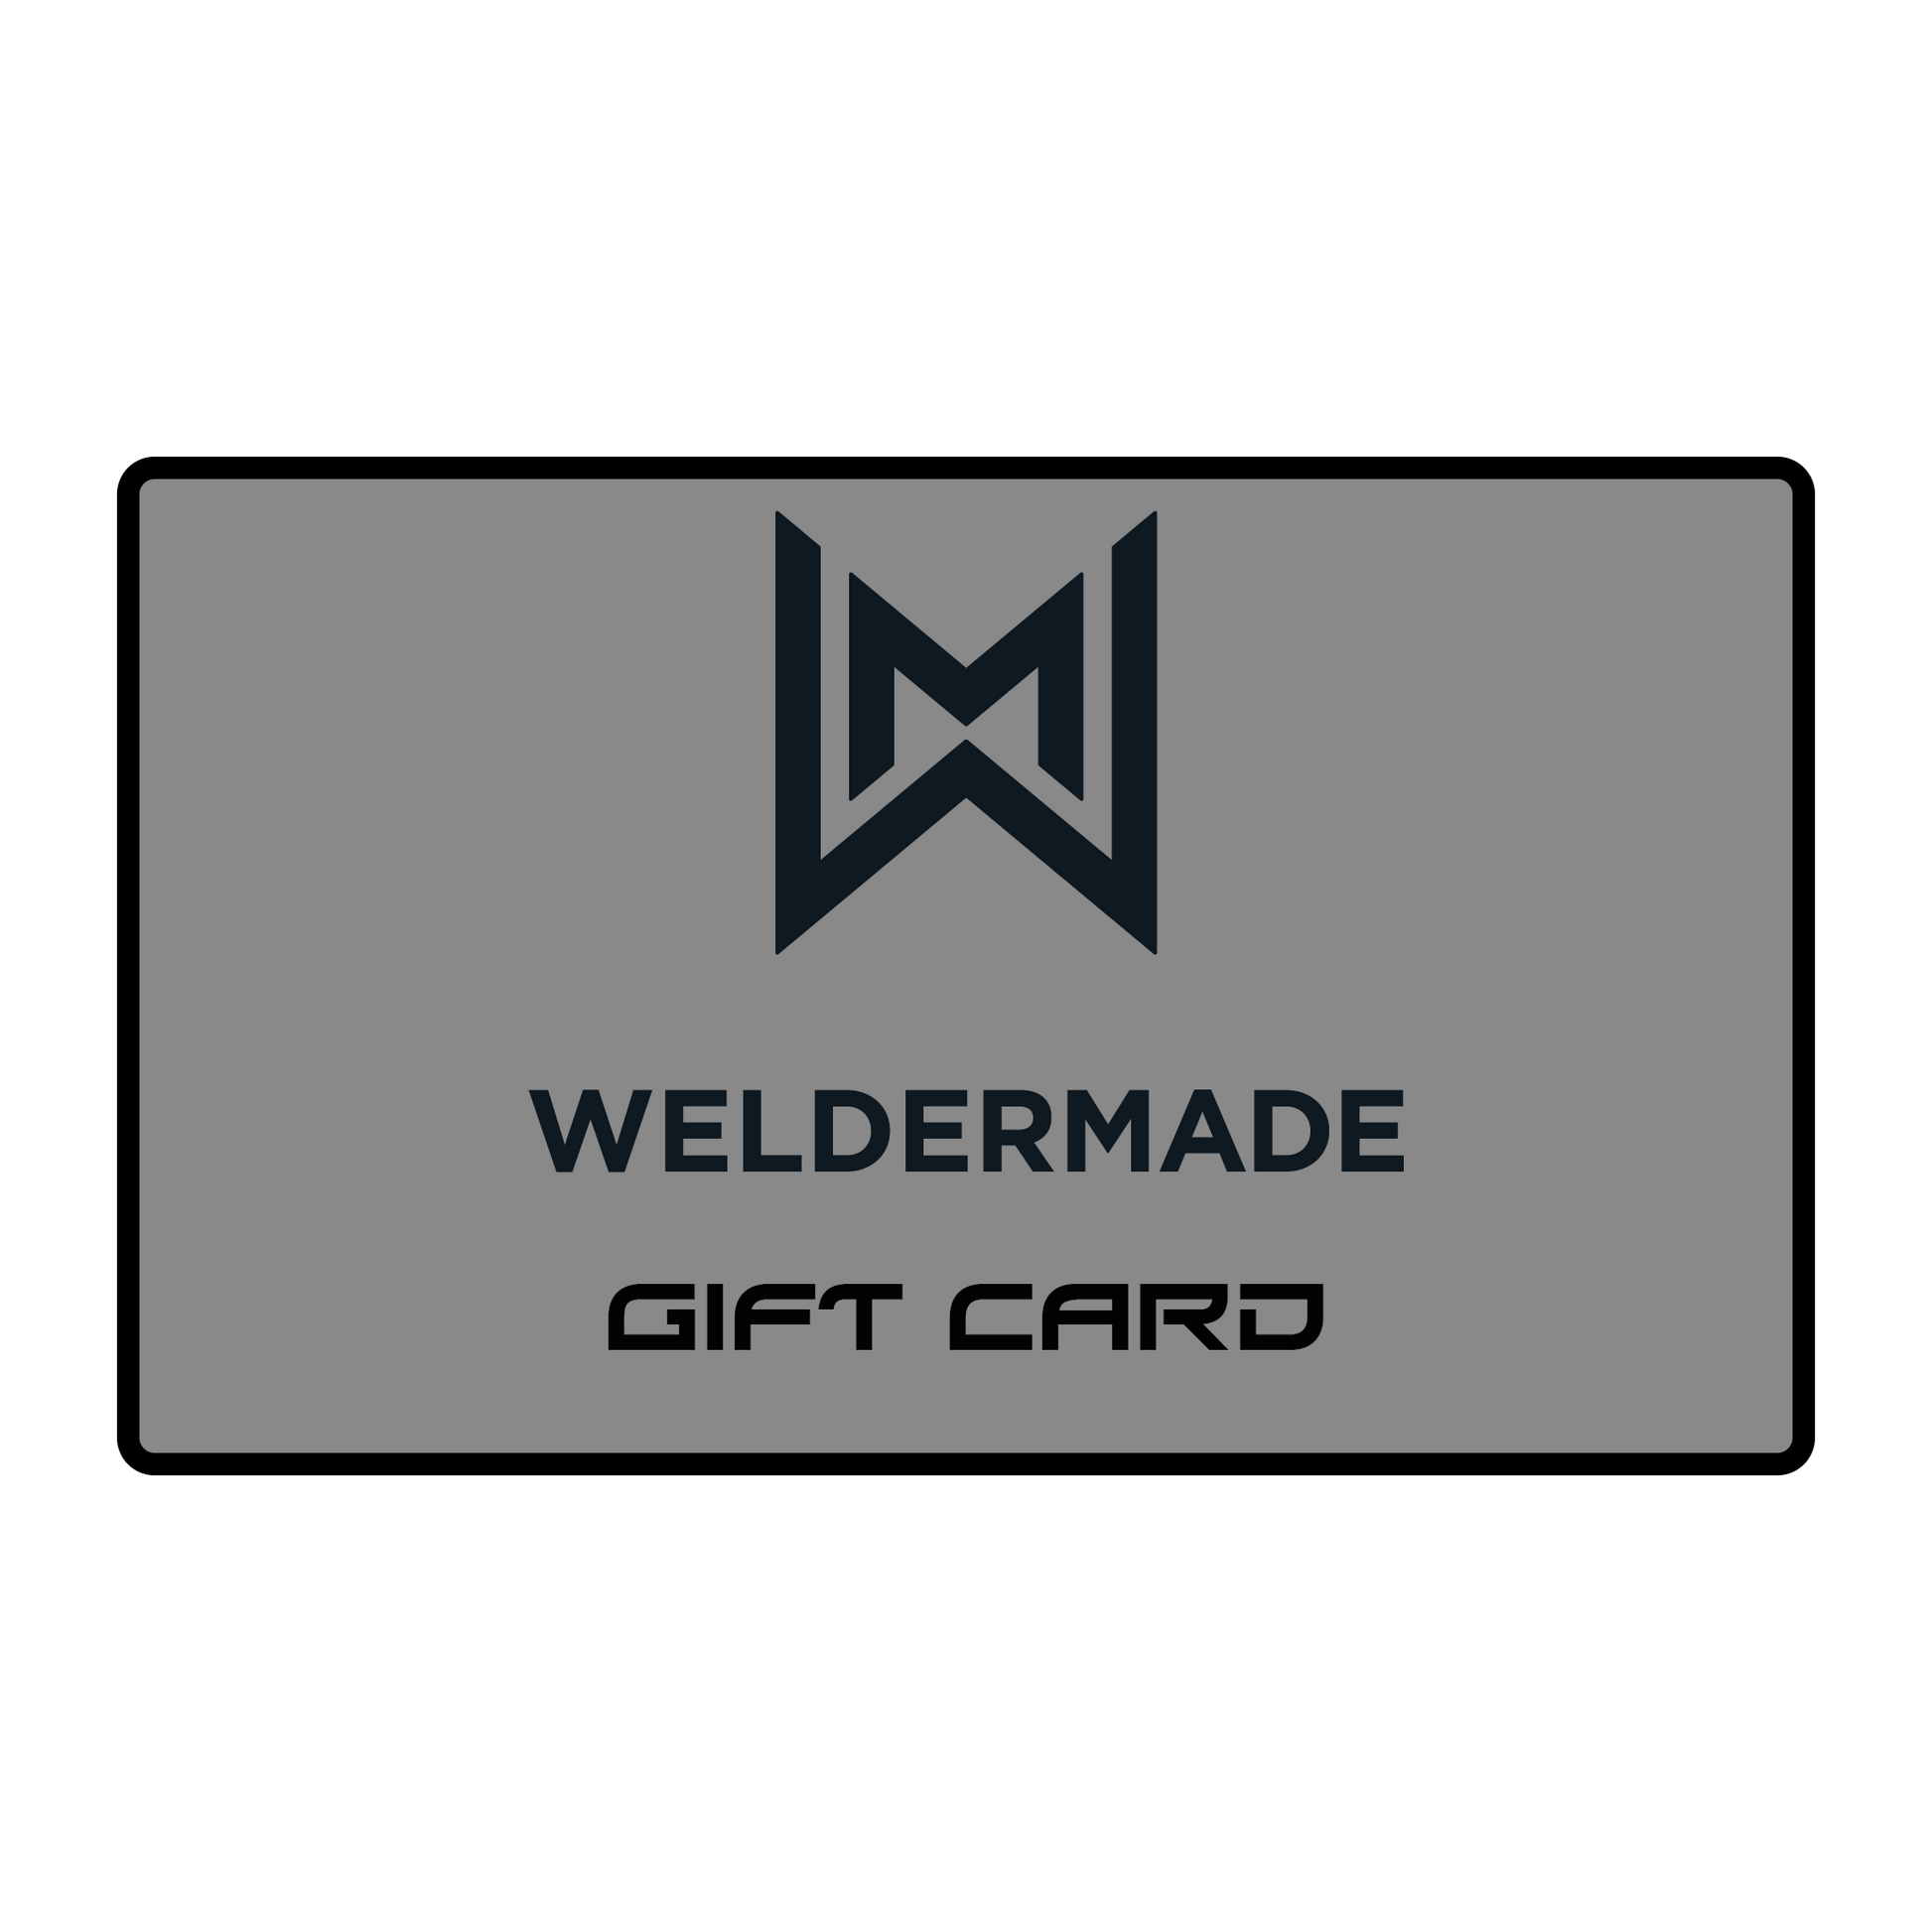 WelderMade Gift Card - Weldermade